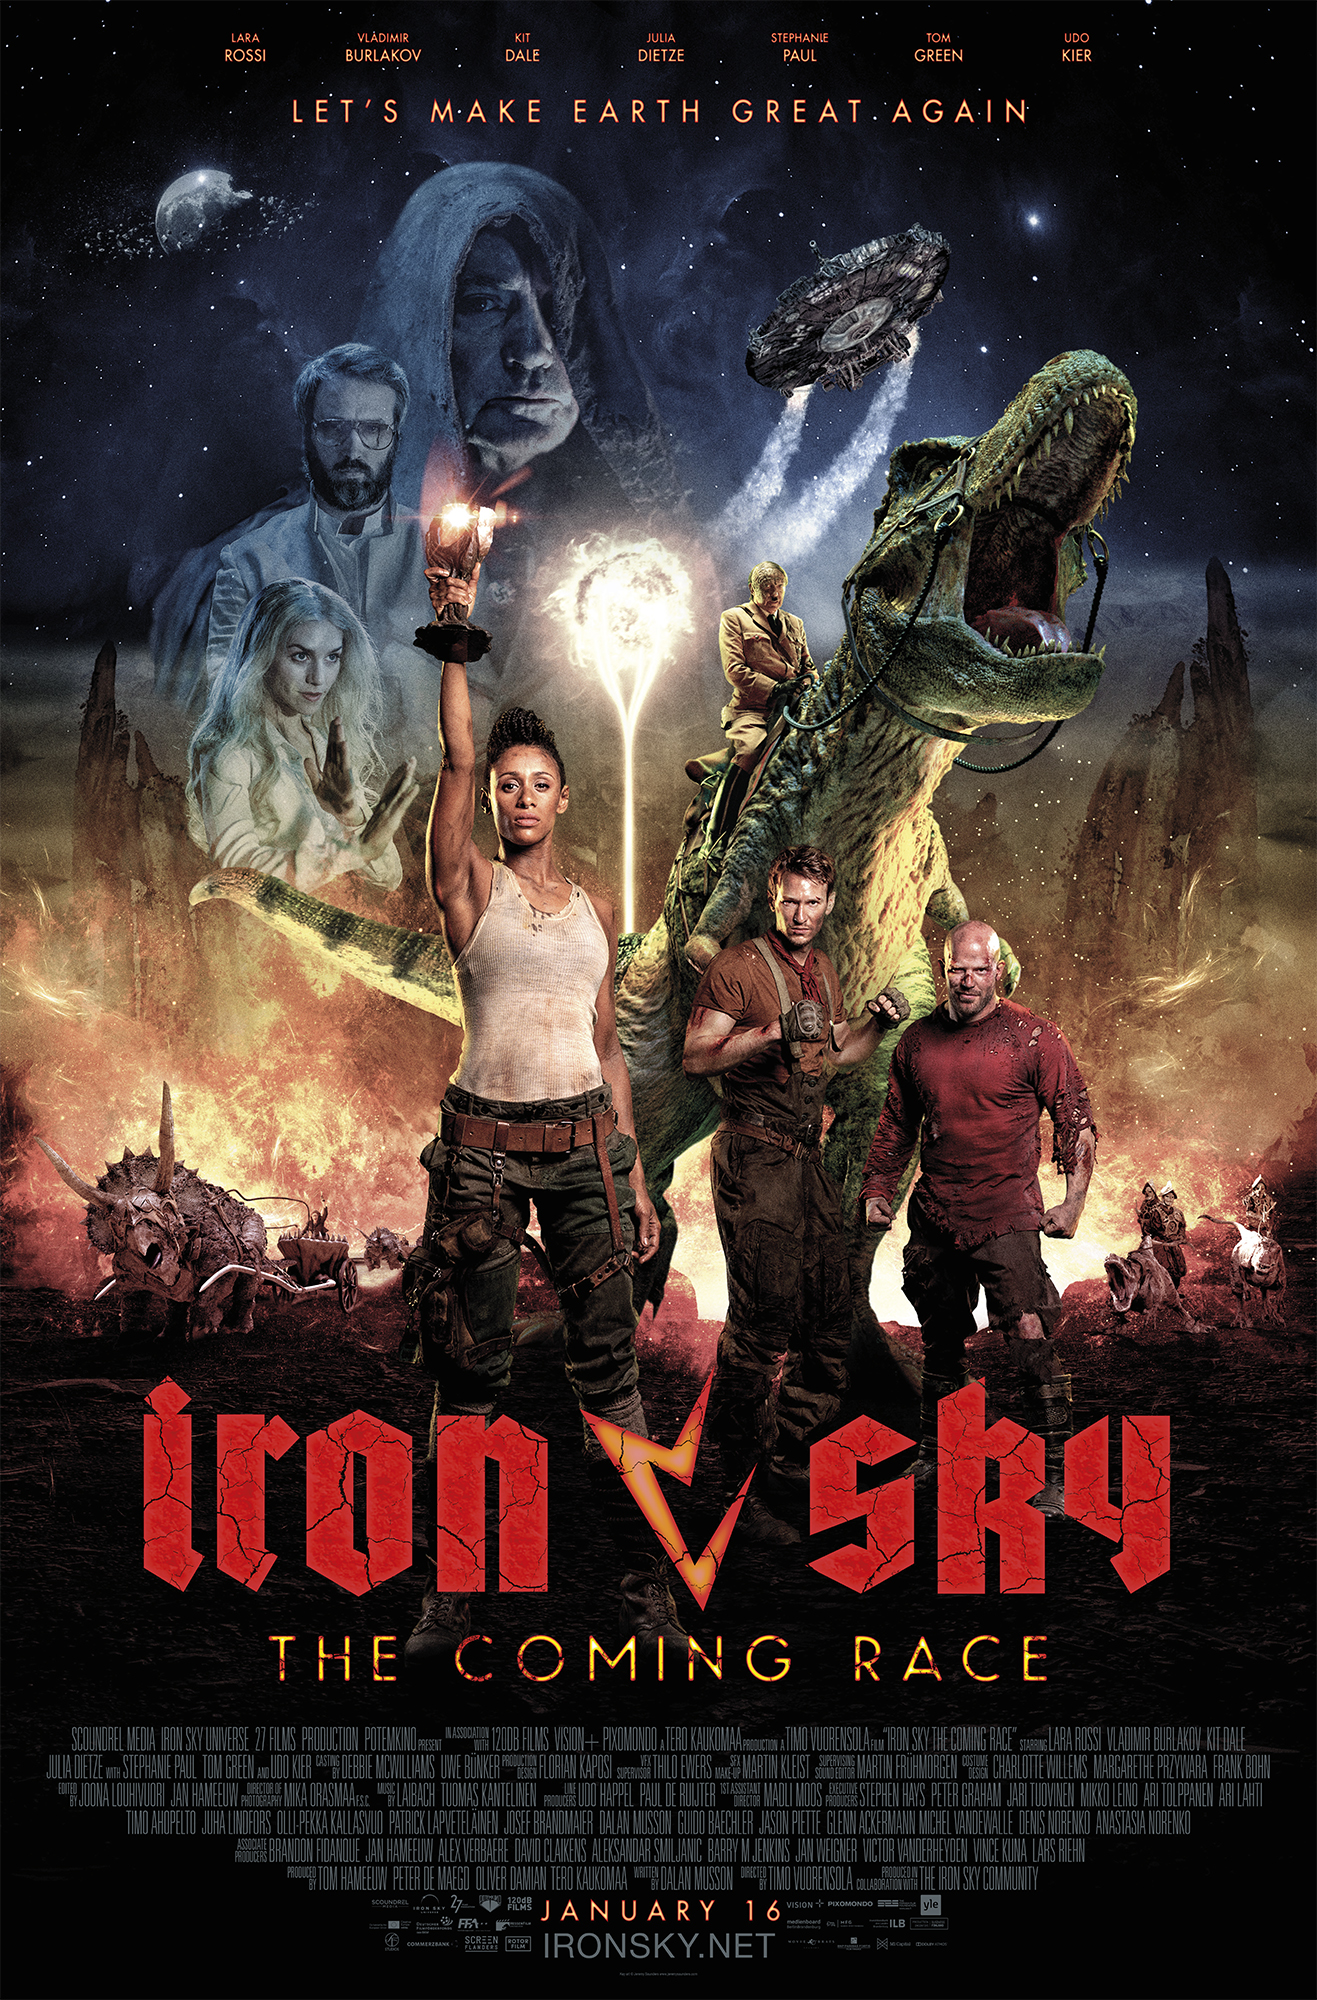 Stiahni si Filmy s titulkama     Iron Sky: The Coming Race (2019)[1080p] = CSFD 51%